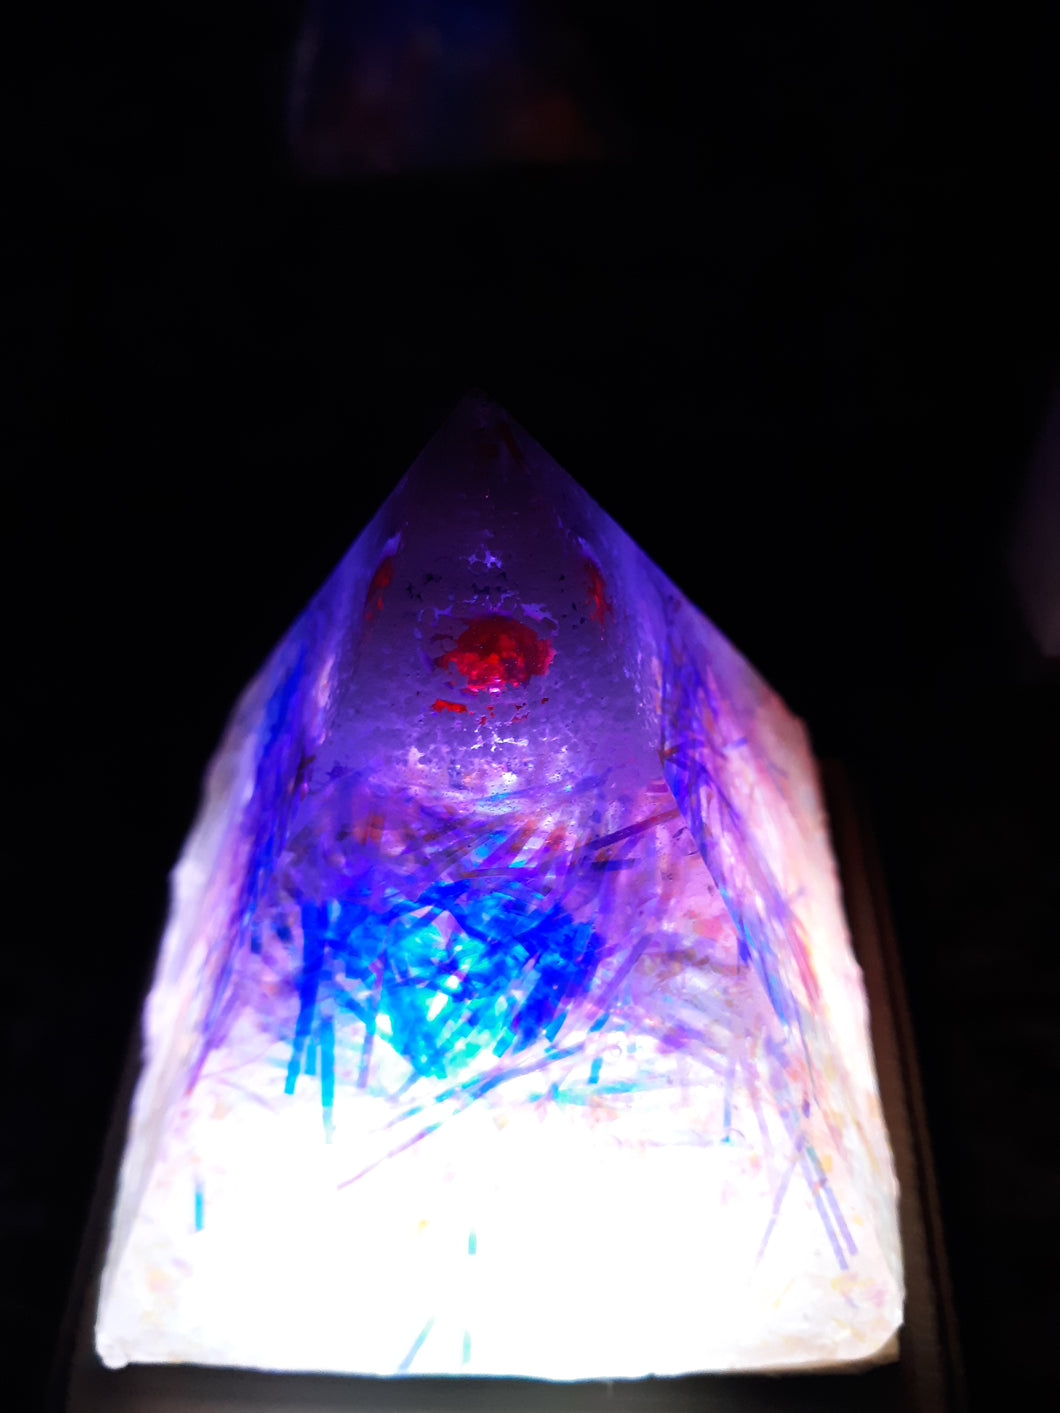 Christmas garland pyramid that lights up and glows